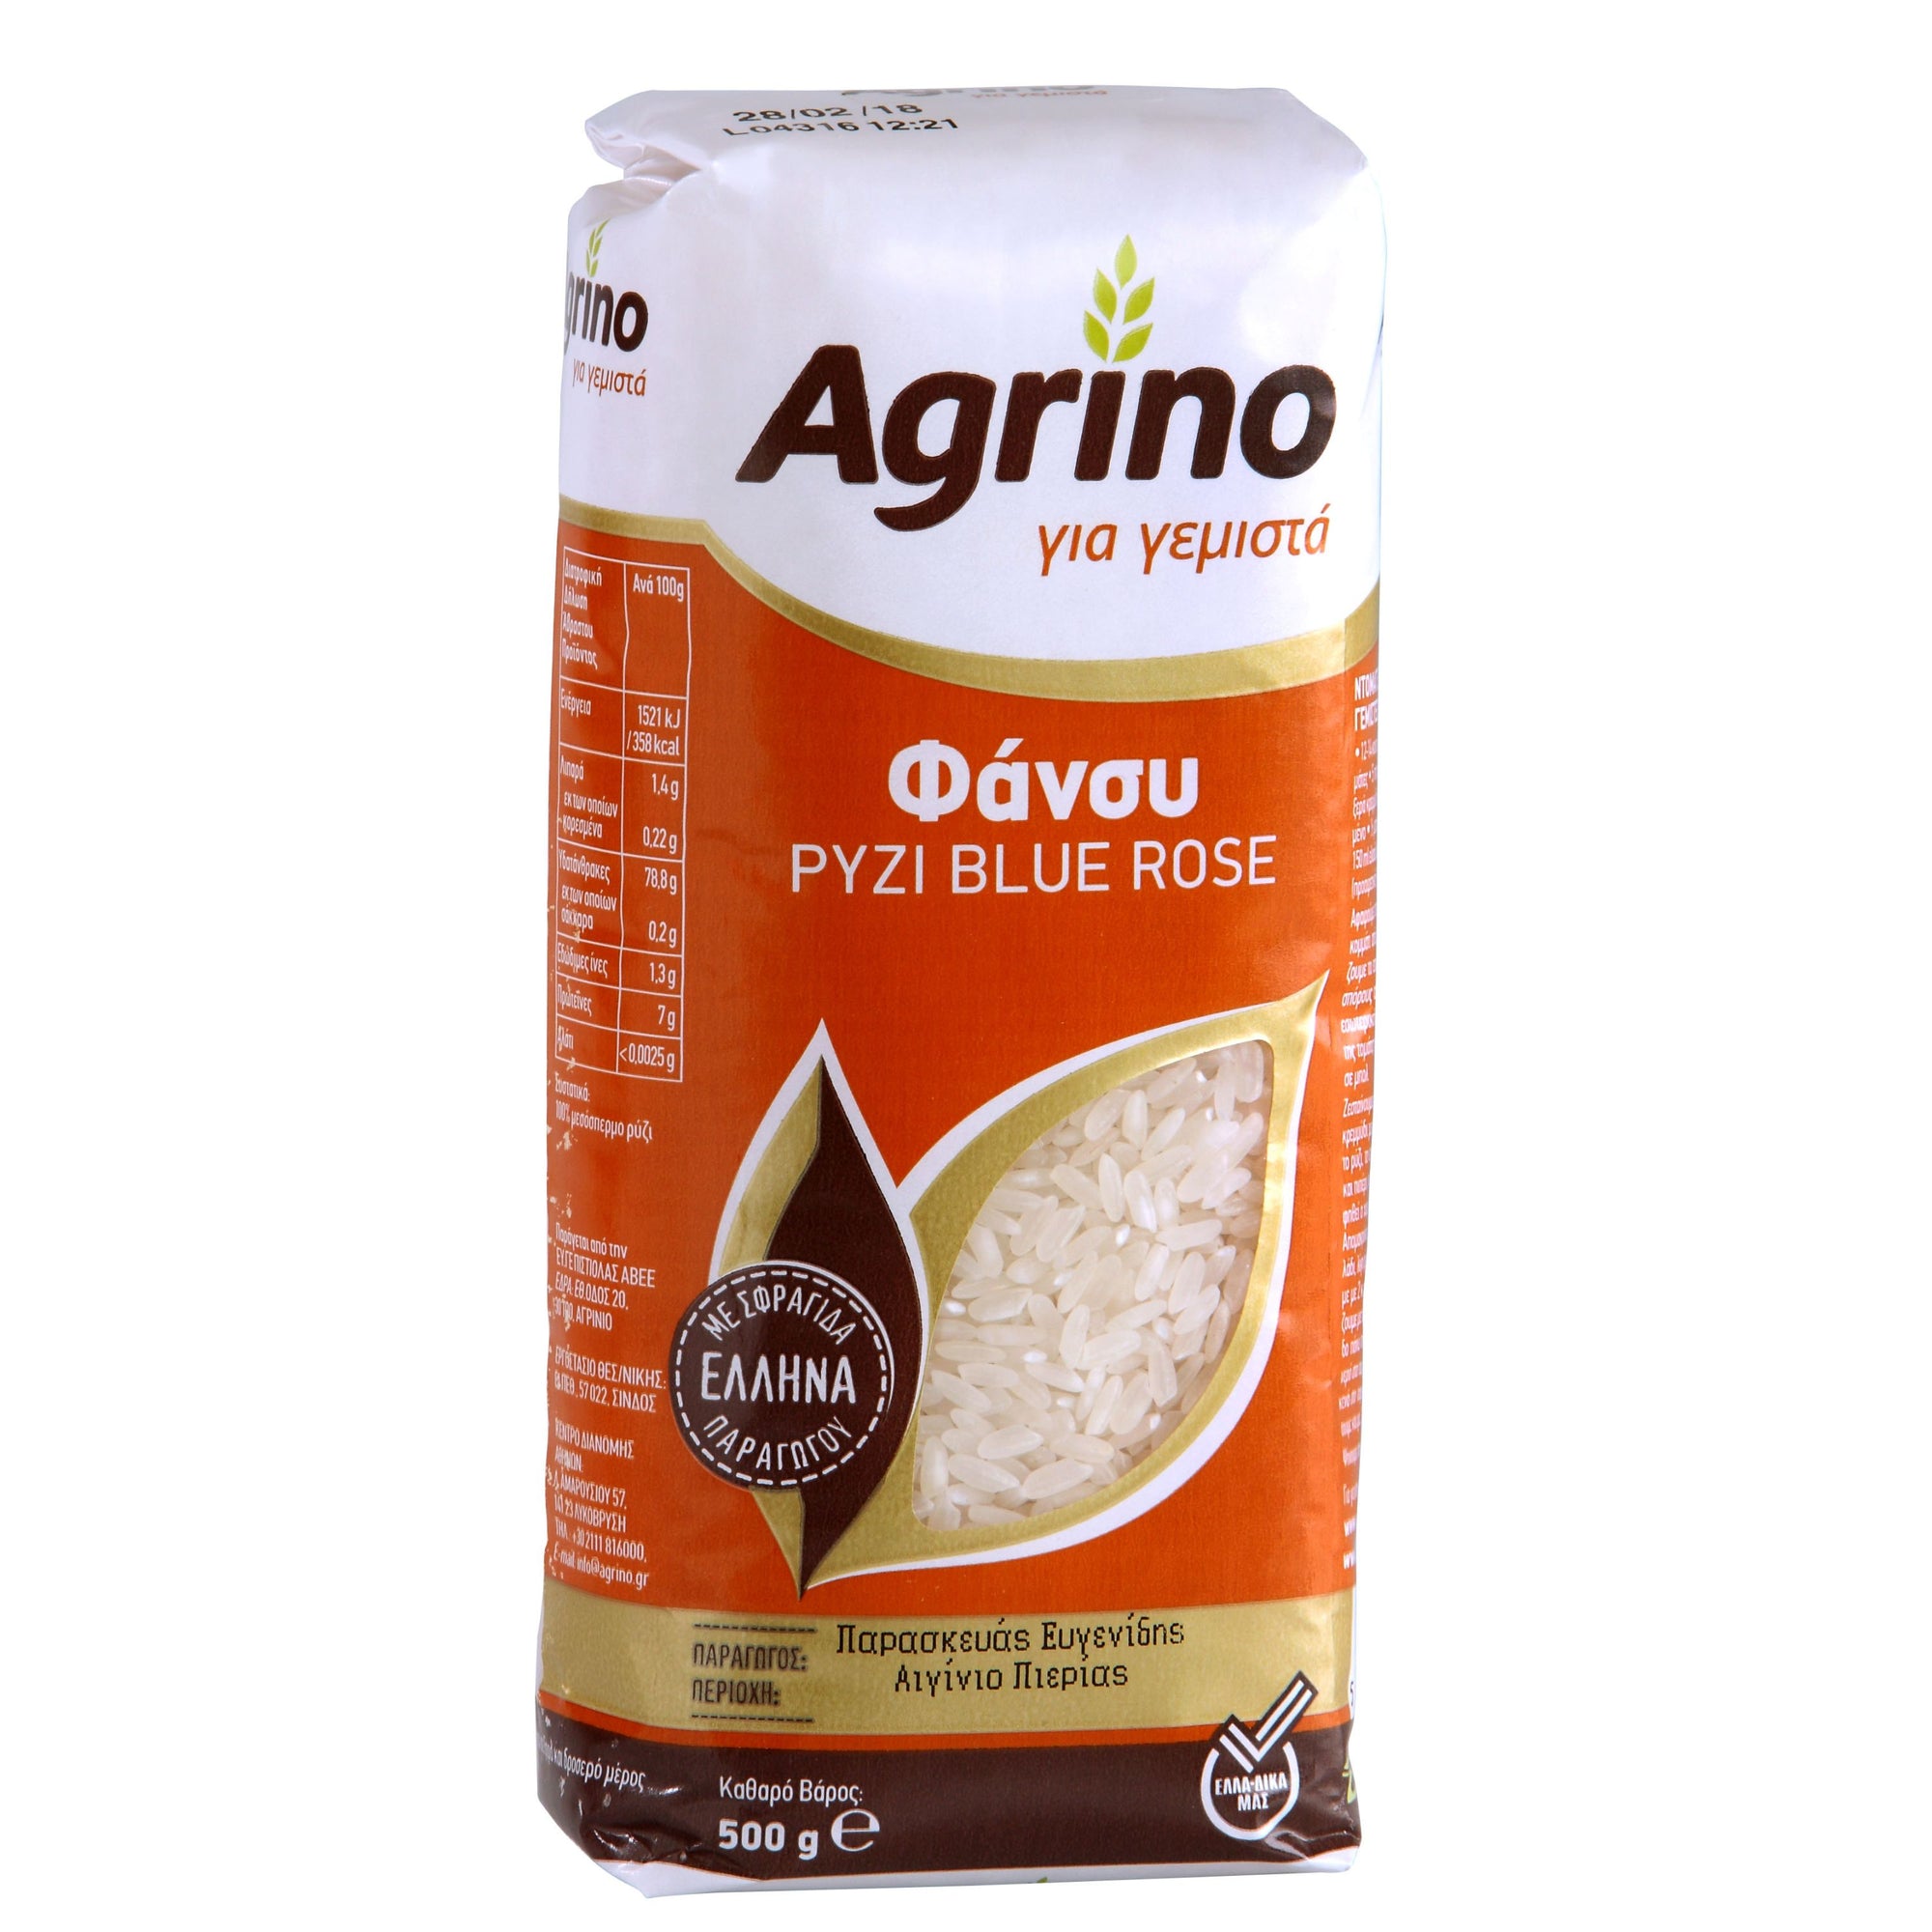 Agrino Fancy Rice 500g